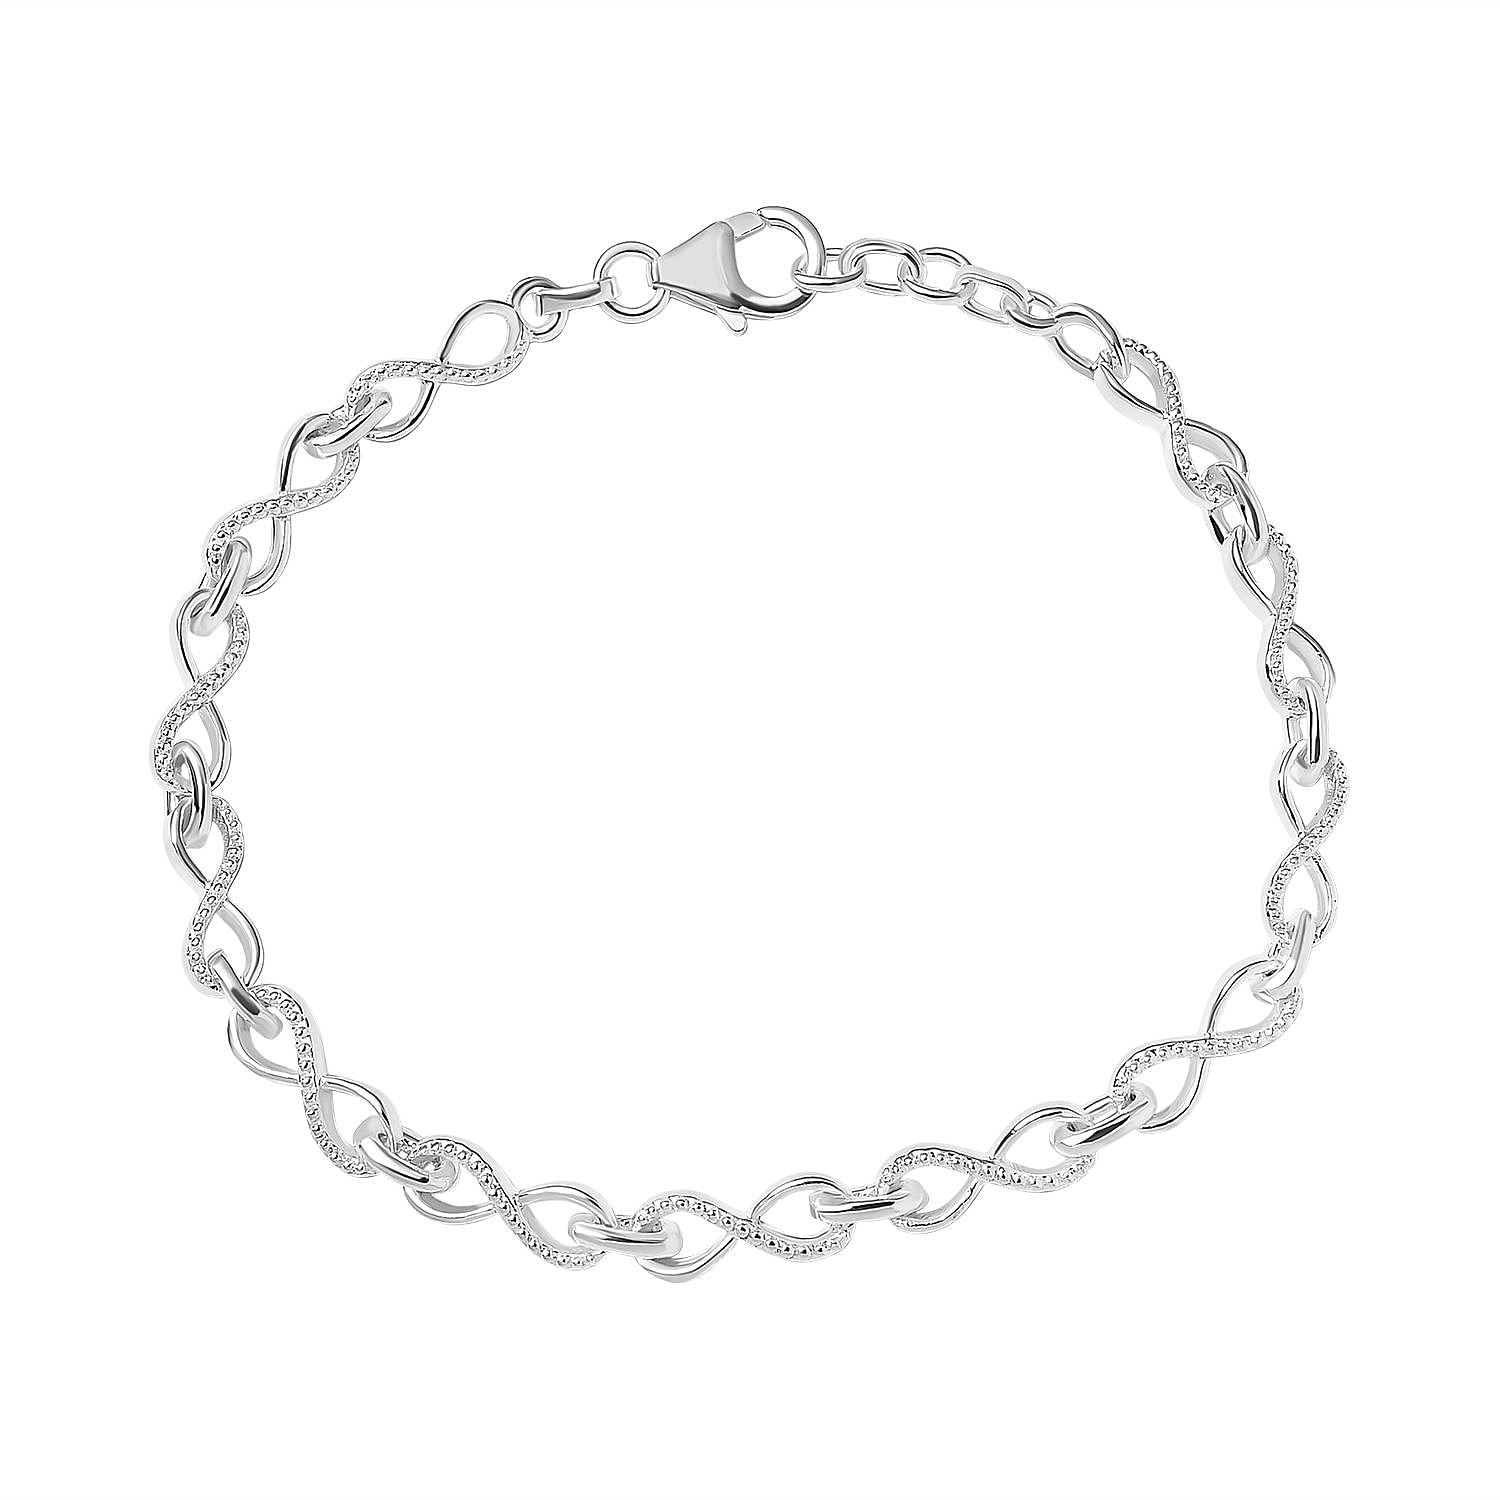 Gemstone .925 Sterling Silver Bracelet from Bali – Bridge Street Bazaar